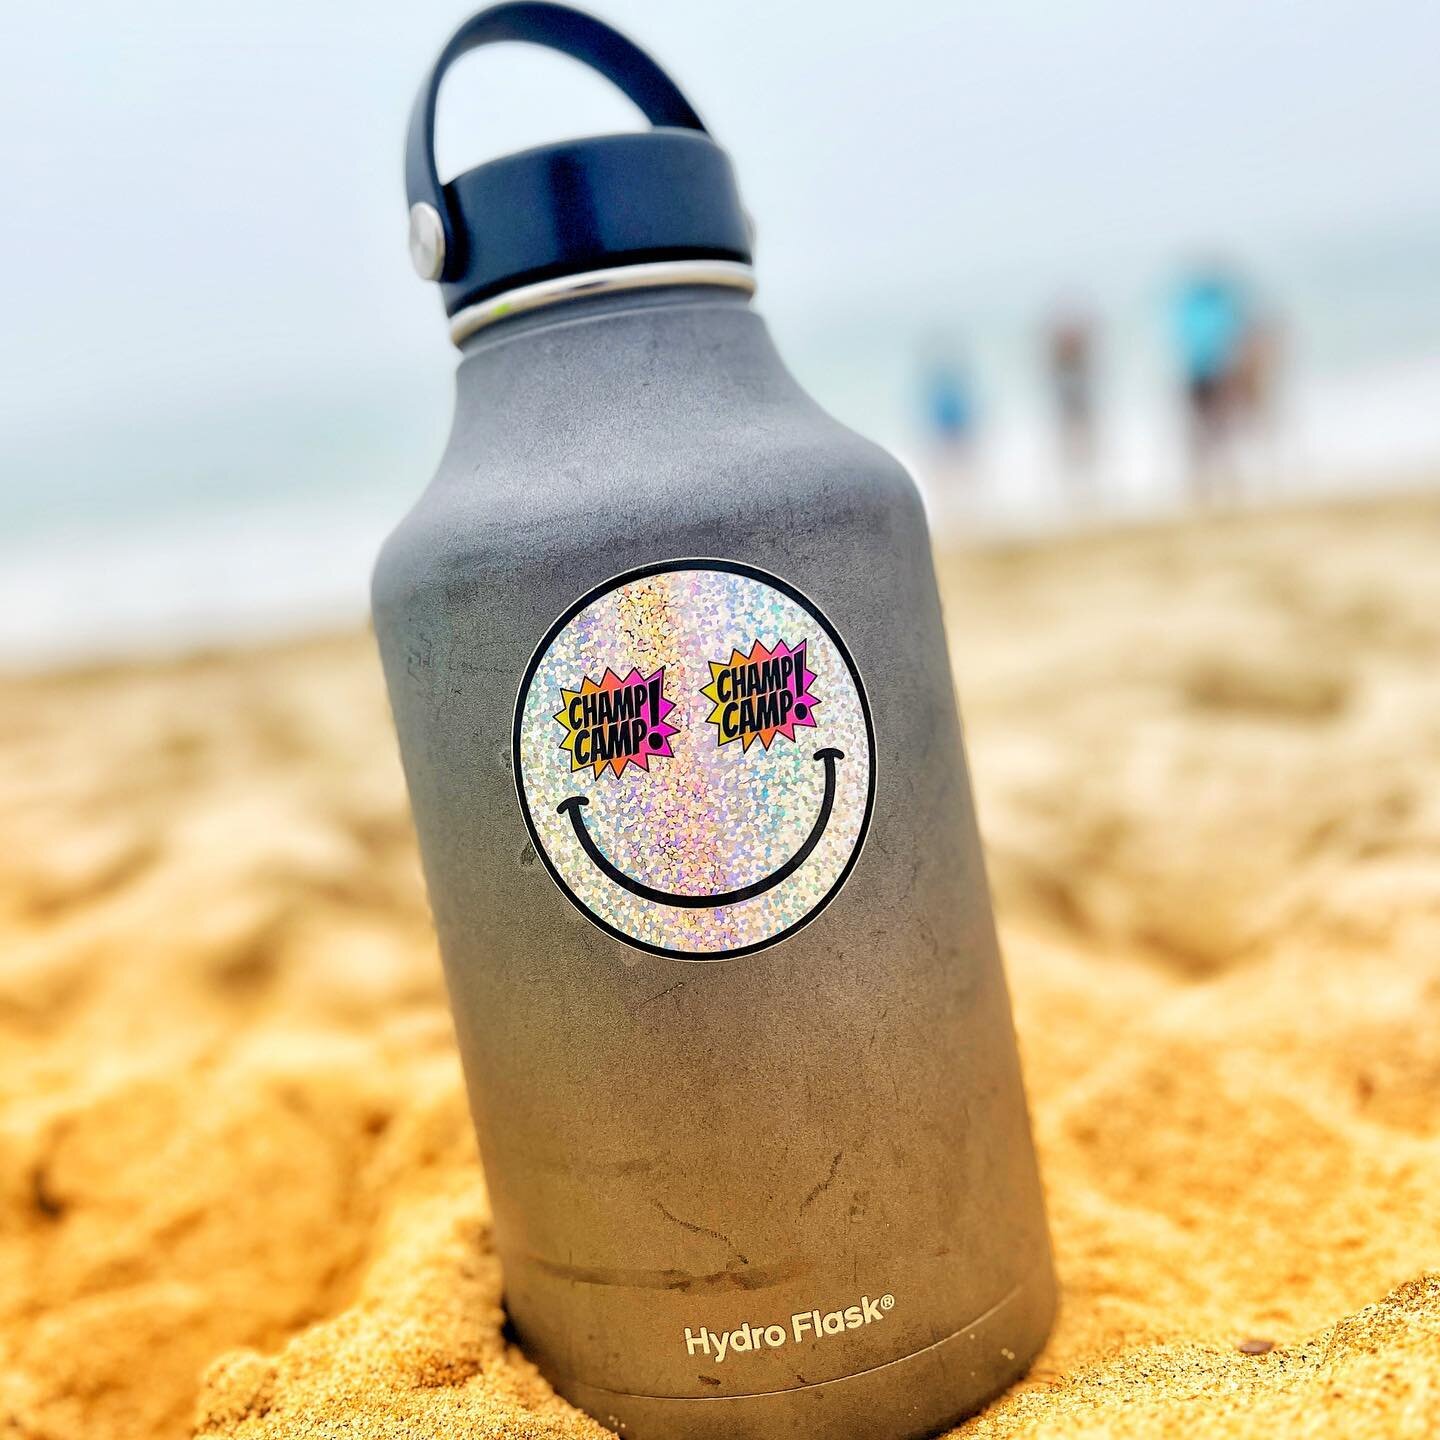 Stay happy and hydrated friends!
_____
#HighFivesAndGoodVibes 🤗 
.
.
.
.
.
#manhattanbeach #hermosabeach #redondobeach #elsegundo #SouthBay #kidscamp #champcamp #torrance #summercamp #gundo #SouthBay #mbusd #lausd #esusd #beachcamp #stoked #beachsaf